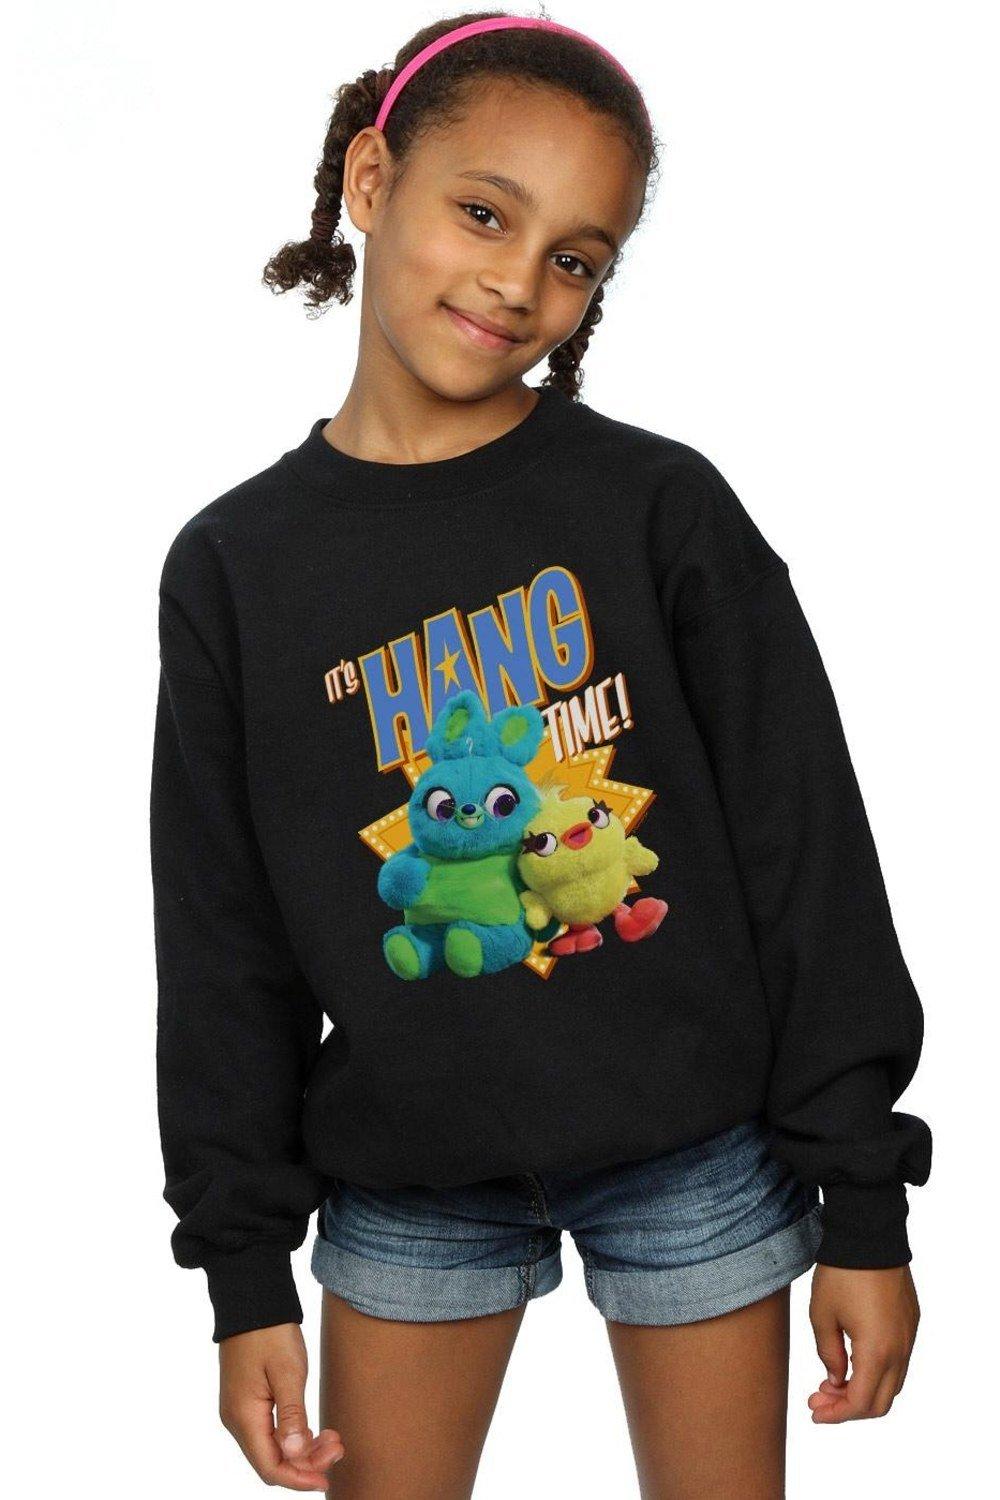 Toy Story 4 It’s Hang Time Sweatshirt